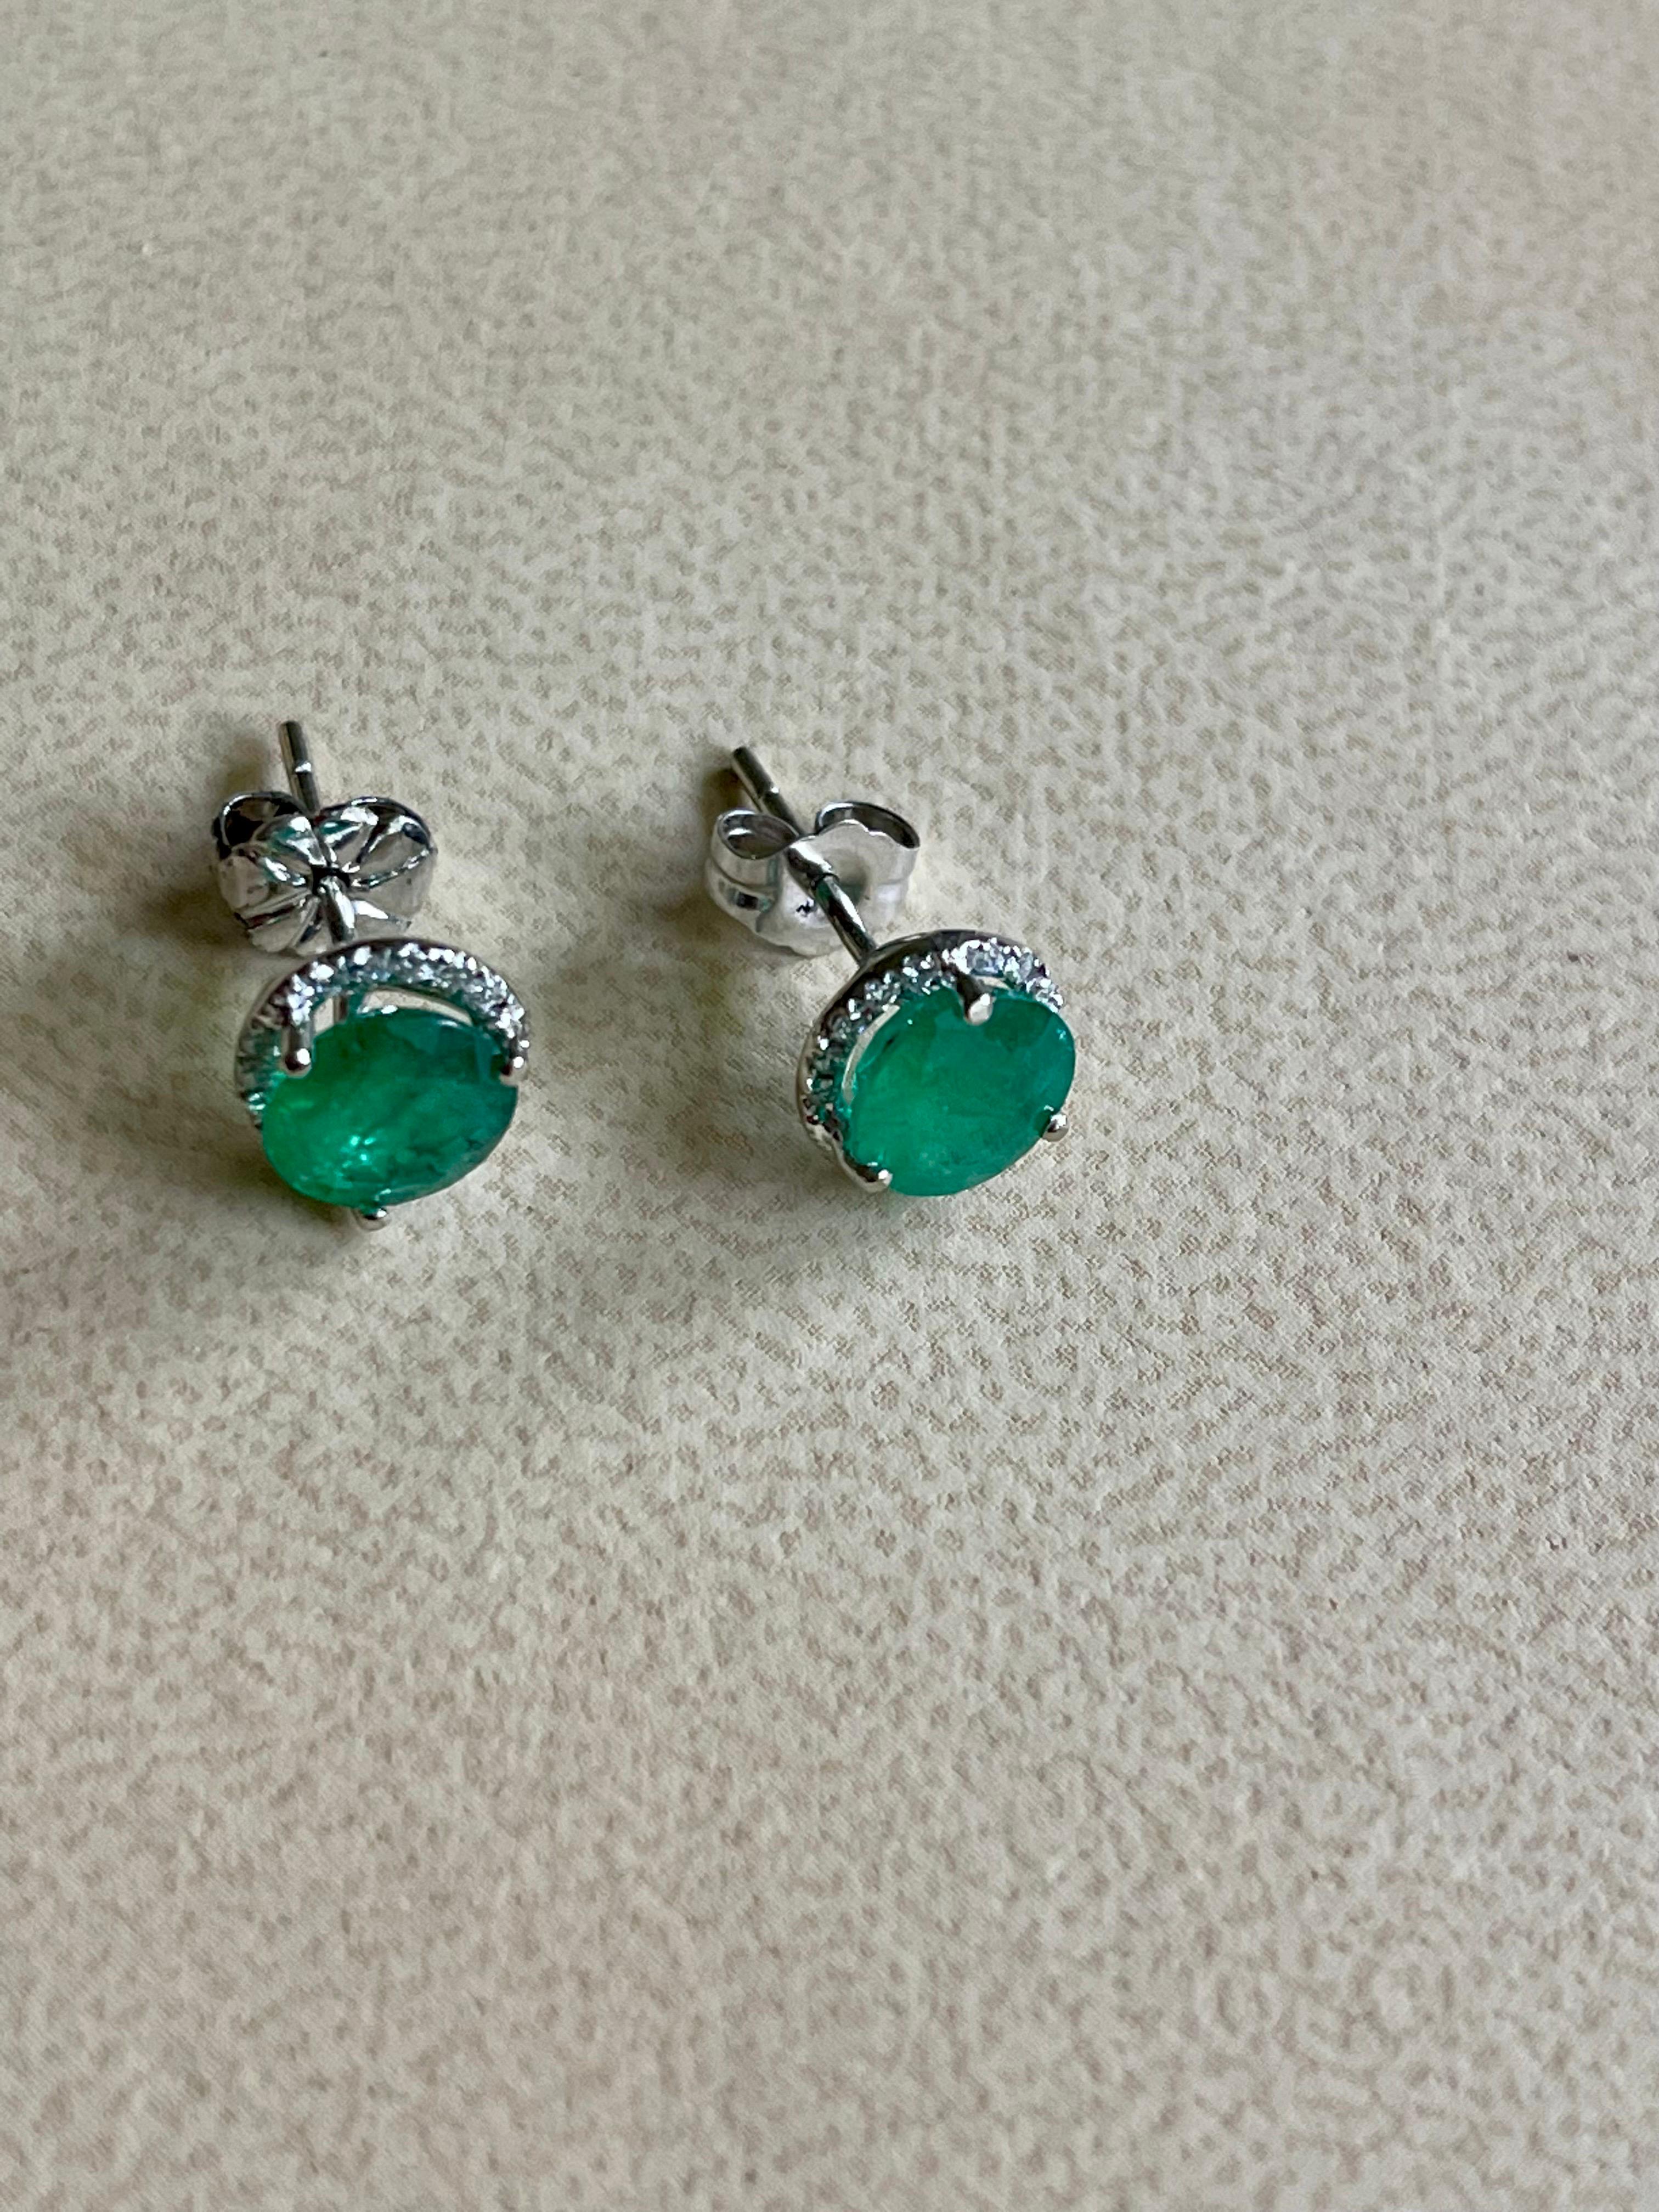 2 Carat Round Natural Emerald & Diamond Stud Post Earrings 14 Karat White Gold 4